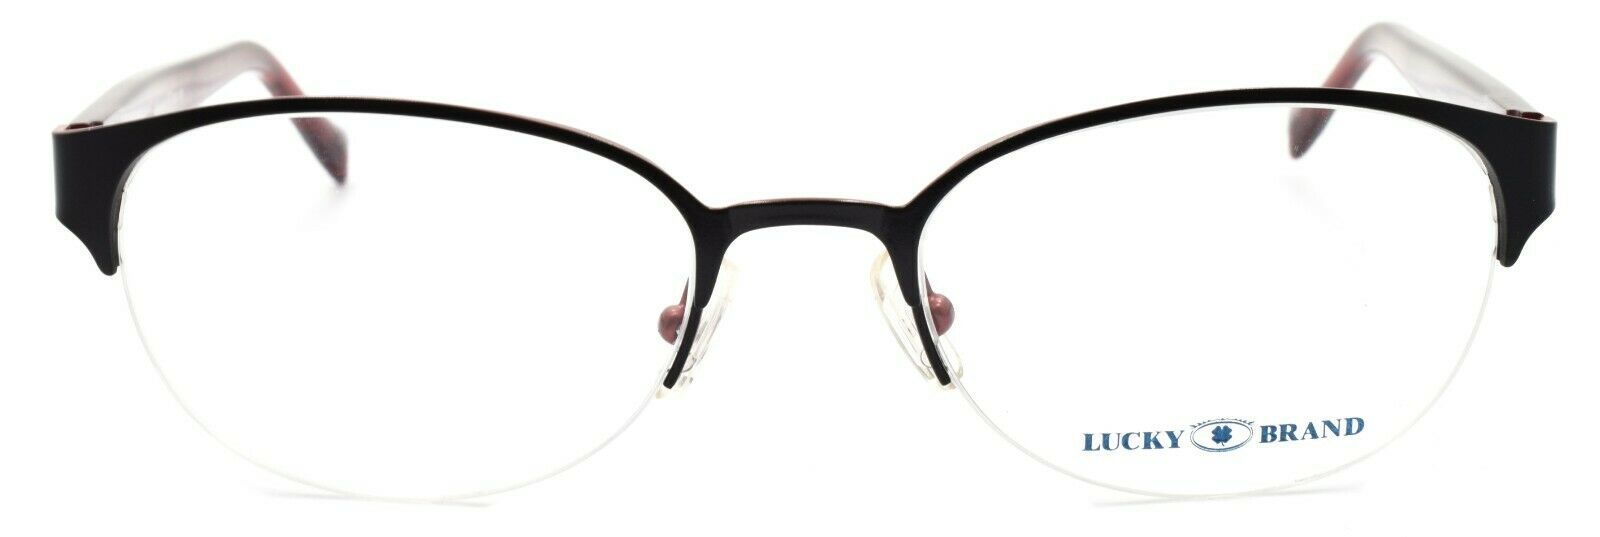 2-LUCKY BRAND Coastal Women's Eyeglasses Frames Half-rim 49-18-135 Black + CASE-751286249385-IKSpecs